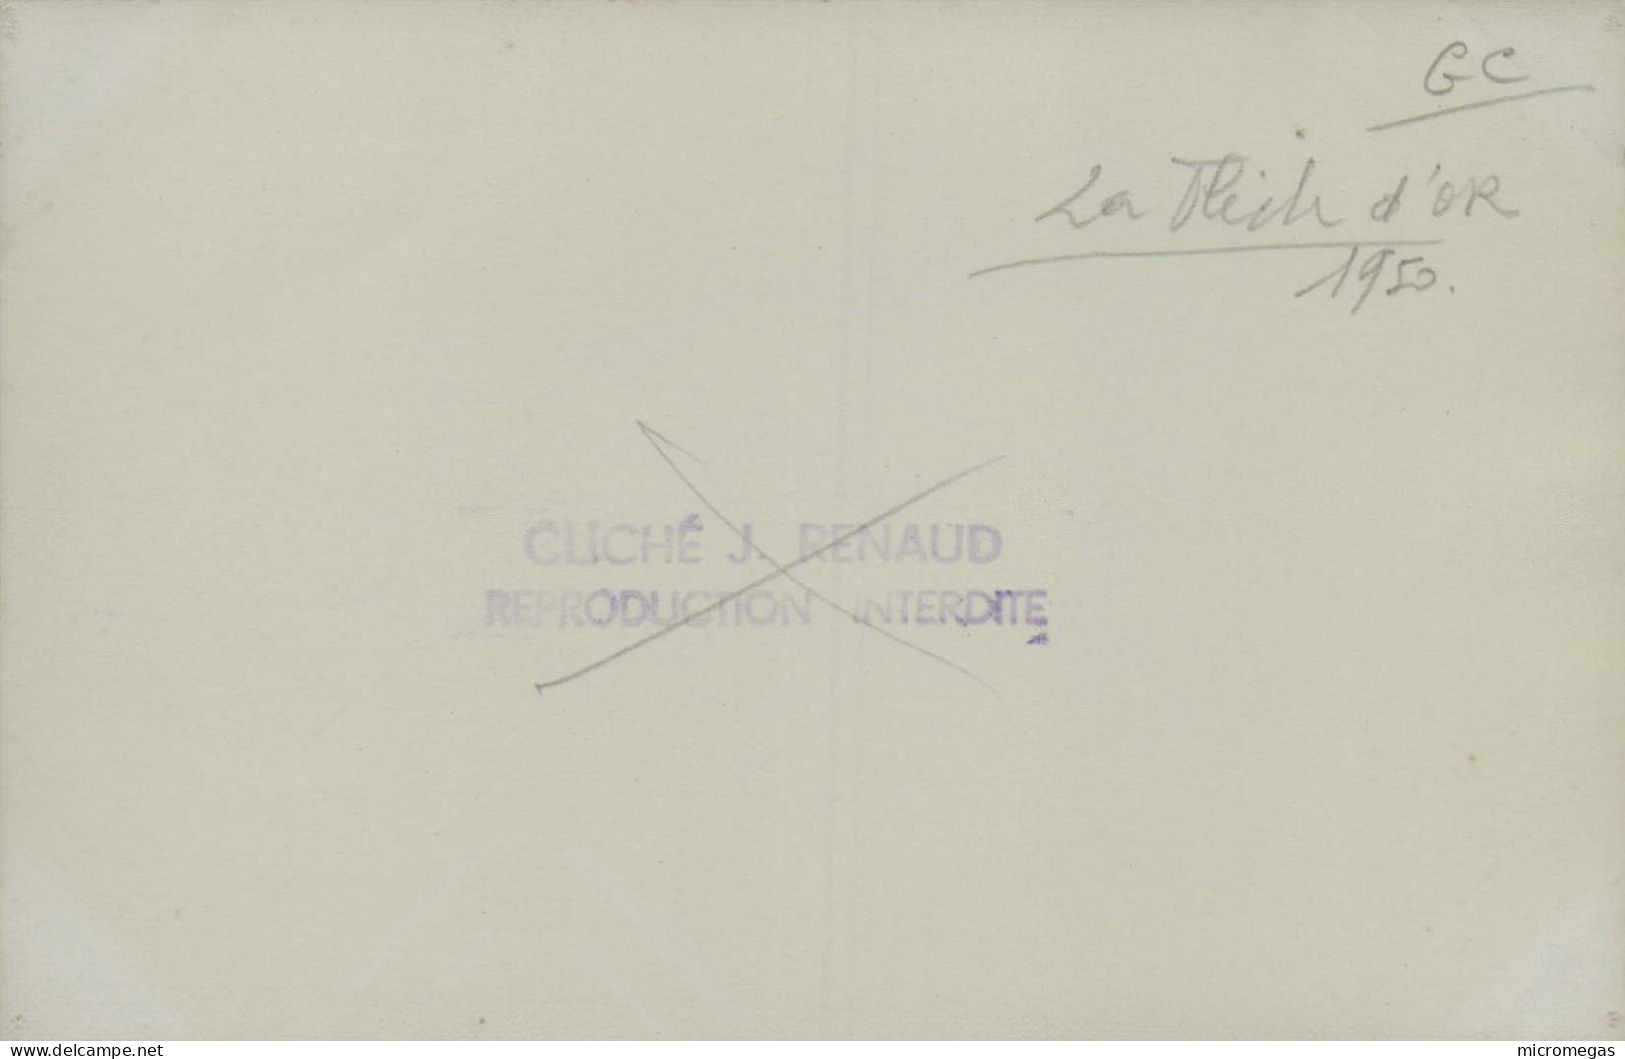 La Flèche D'Or - Cliché J. Renaud, 1950 - Trenes